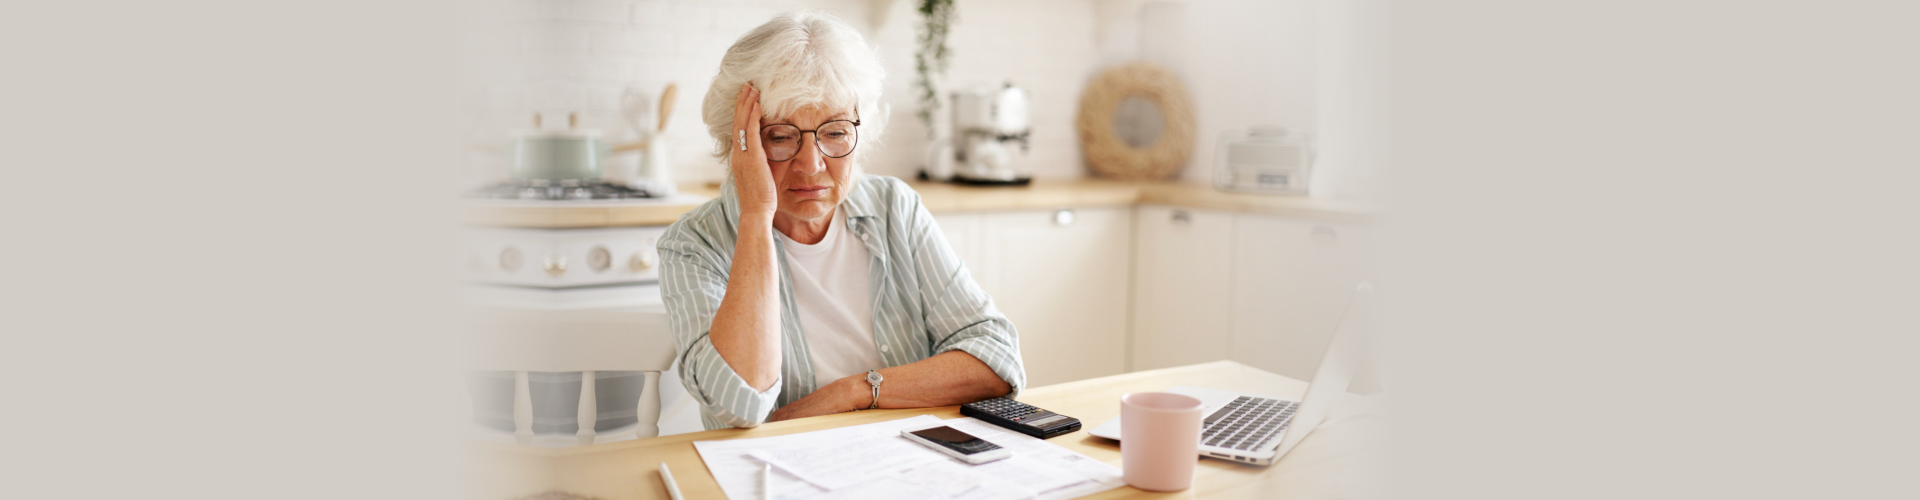 Sad frustrated senior woman pensioner having depressed look,